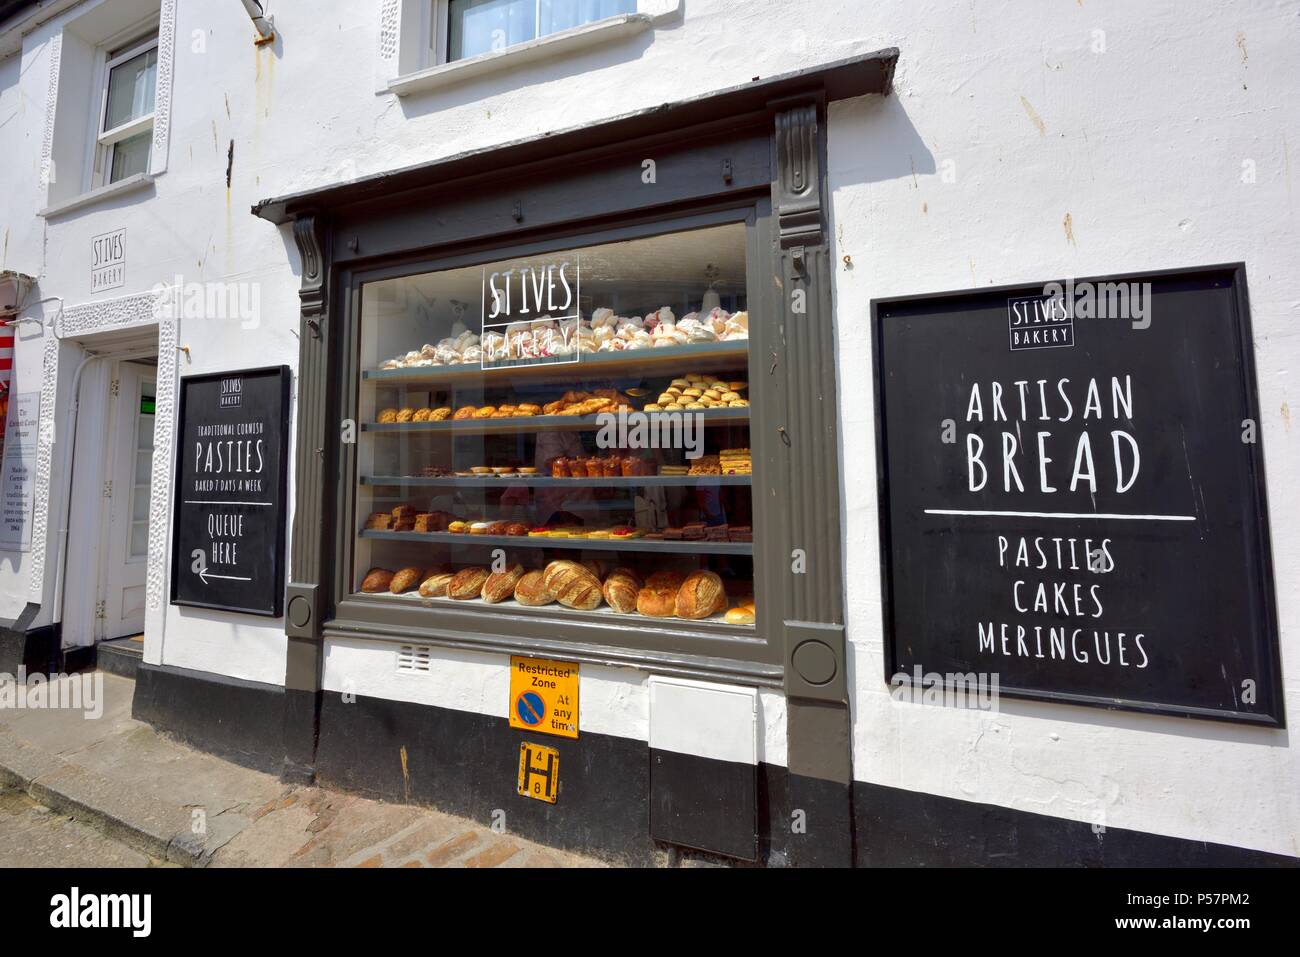 St ives bakery shop front window outside,Cornwall,England,UK Stock Photo